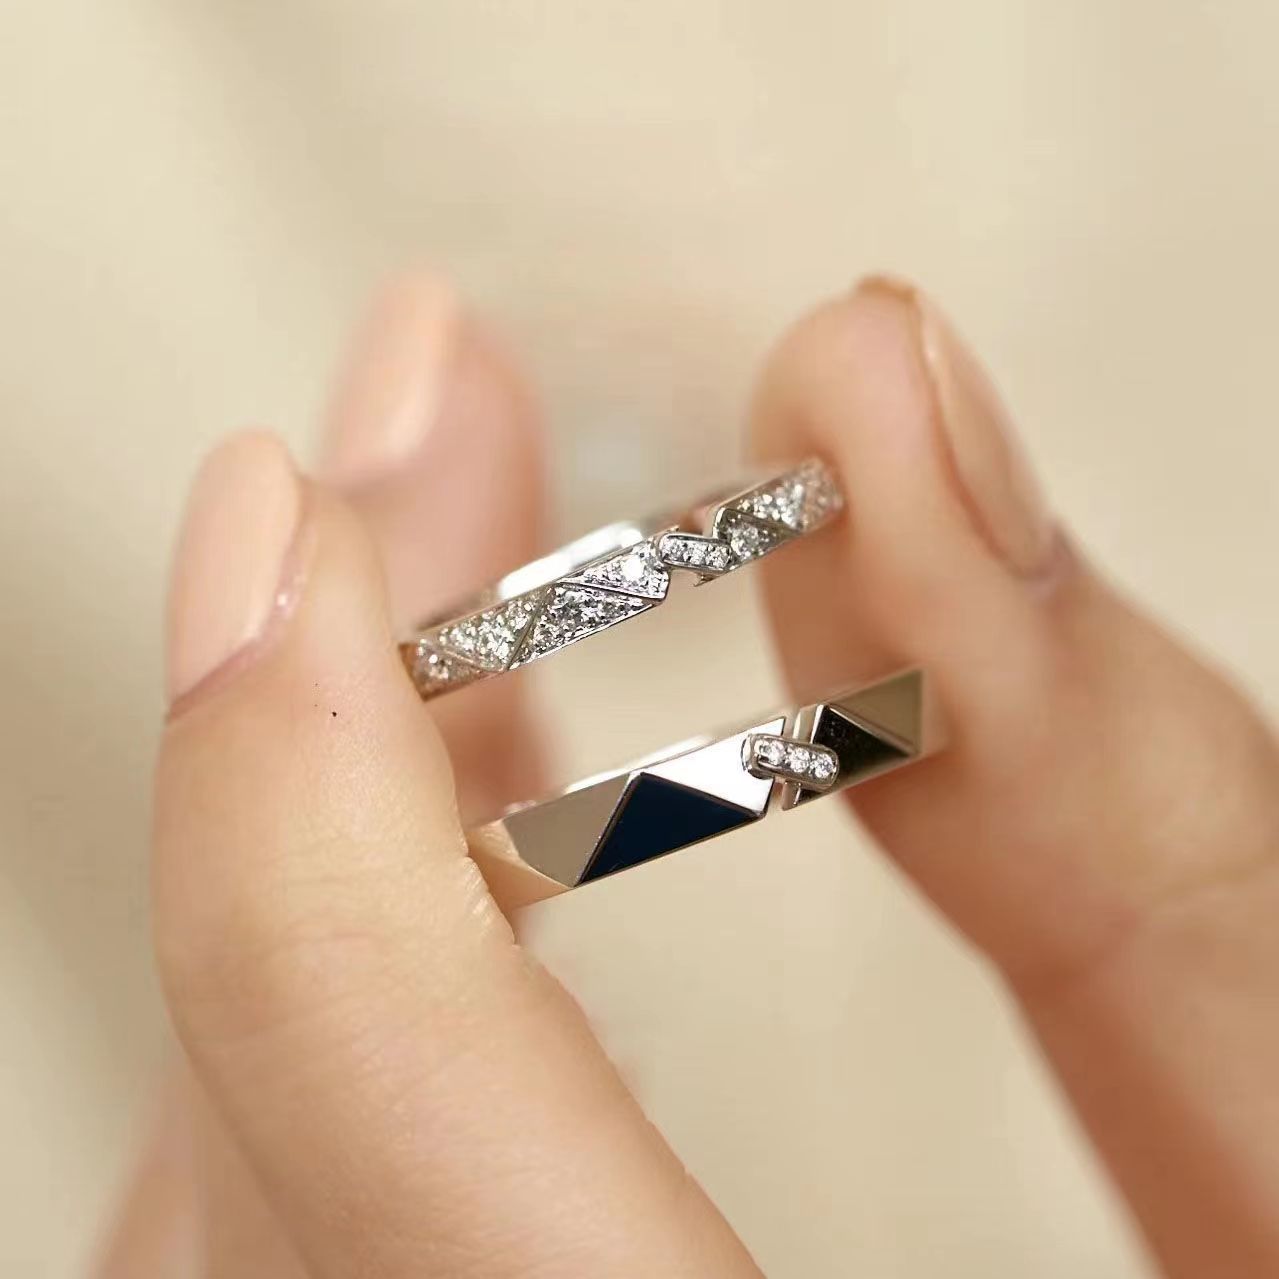 Shiny Couple Ring